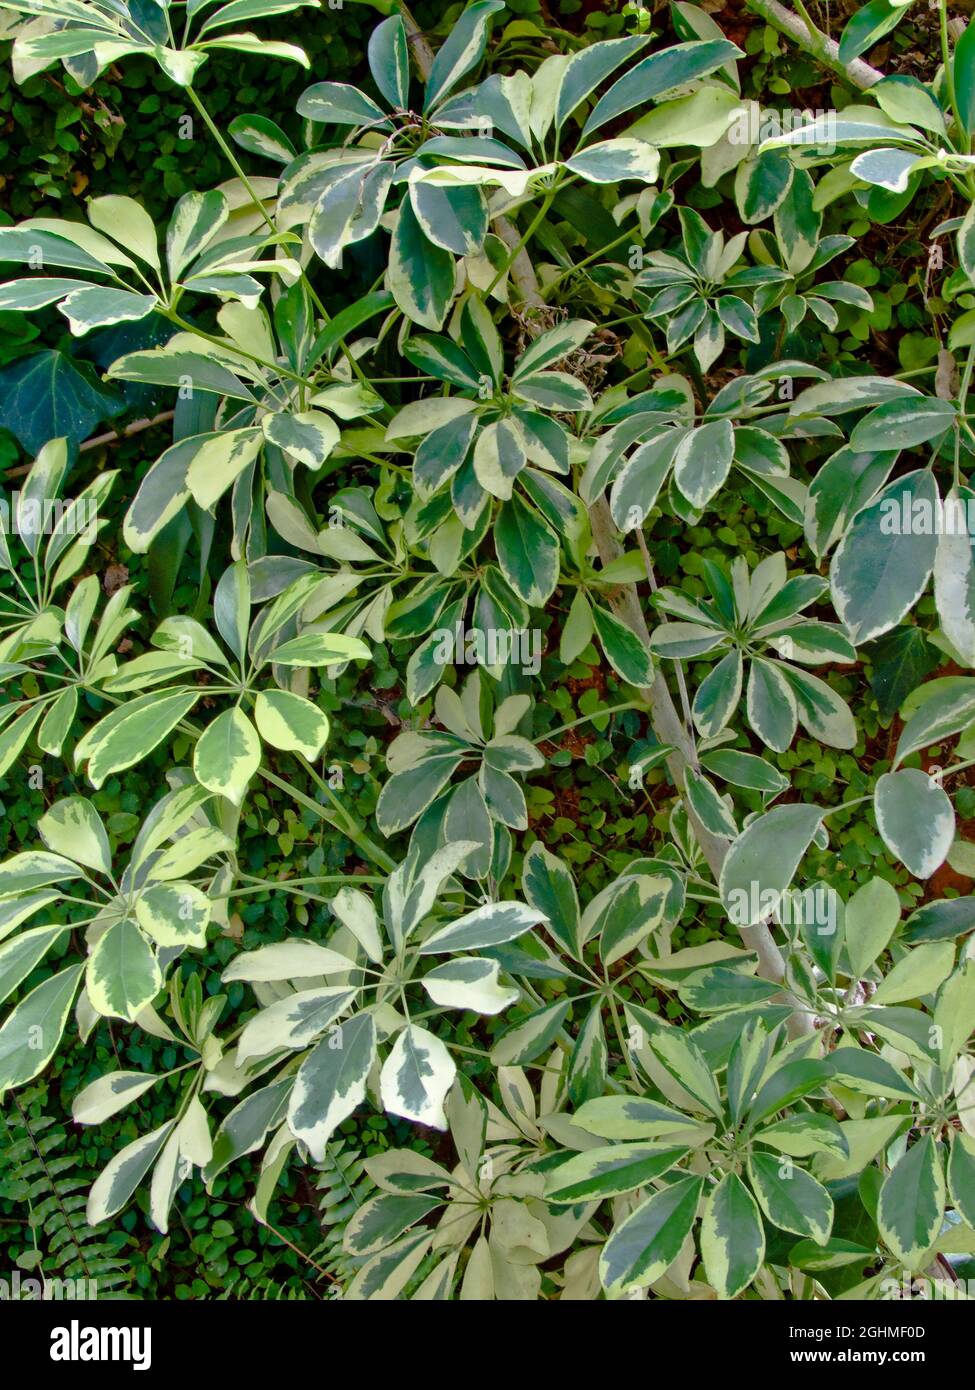 Schefflera actinophylla 'Variegata' Stock Photo